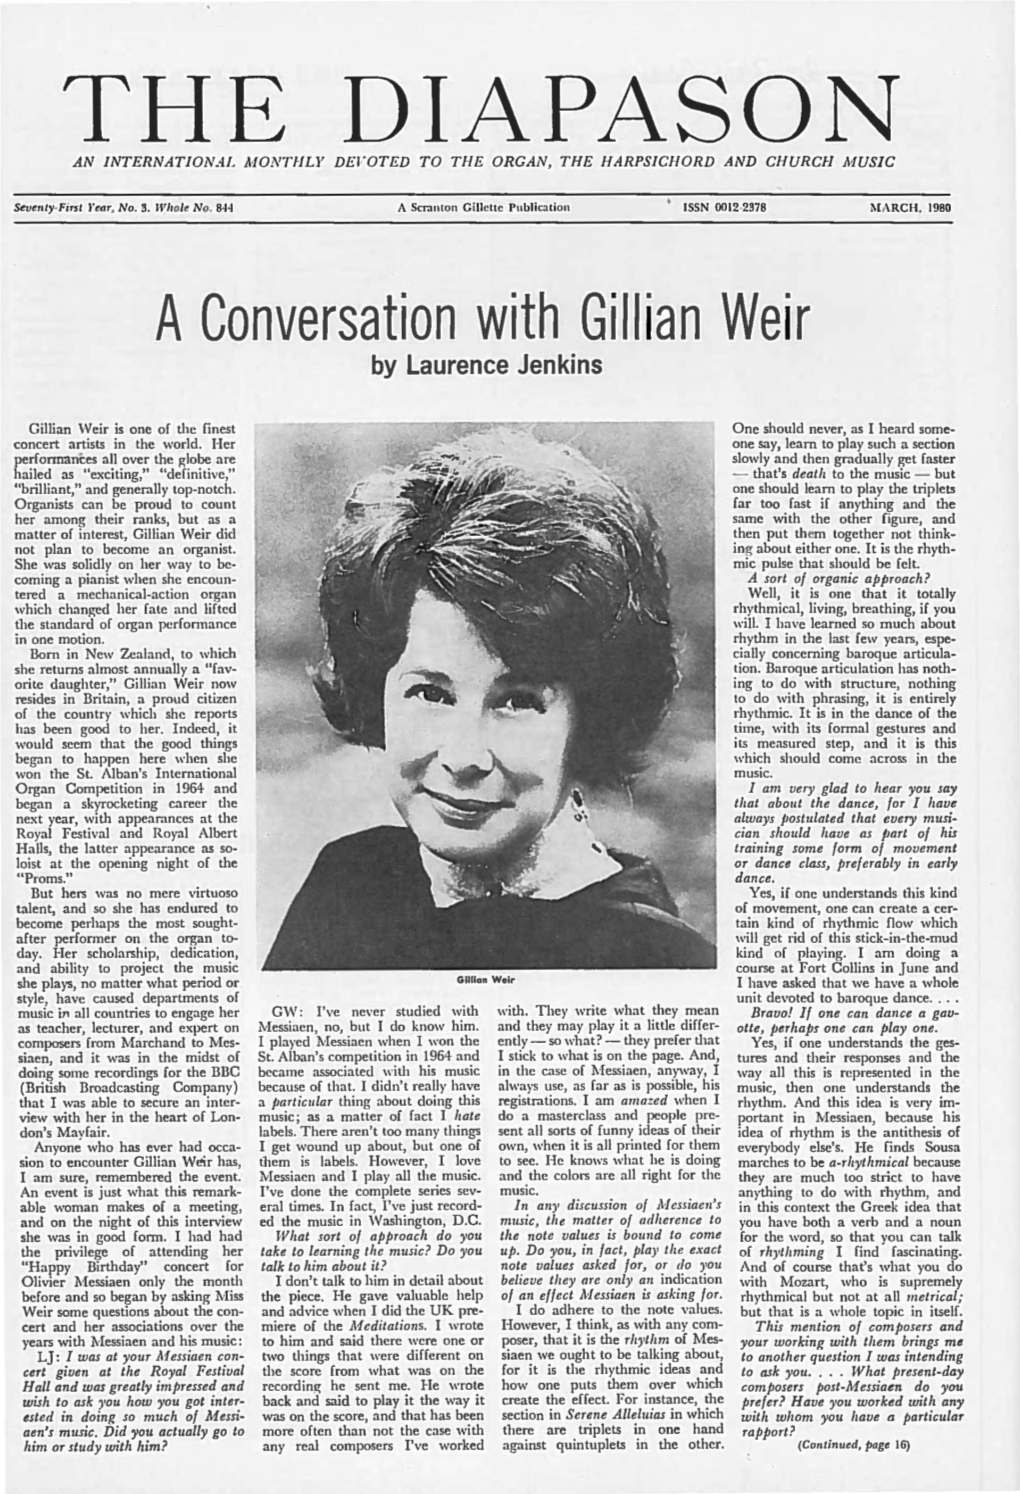 A Conversation with Gillian Weir